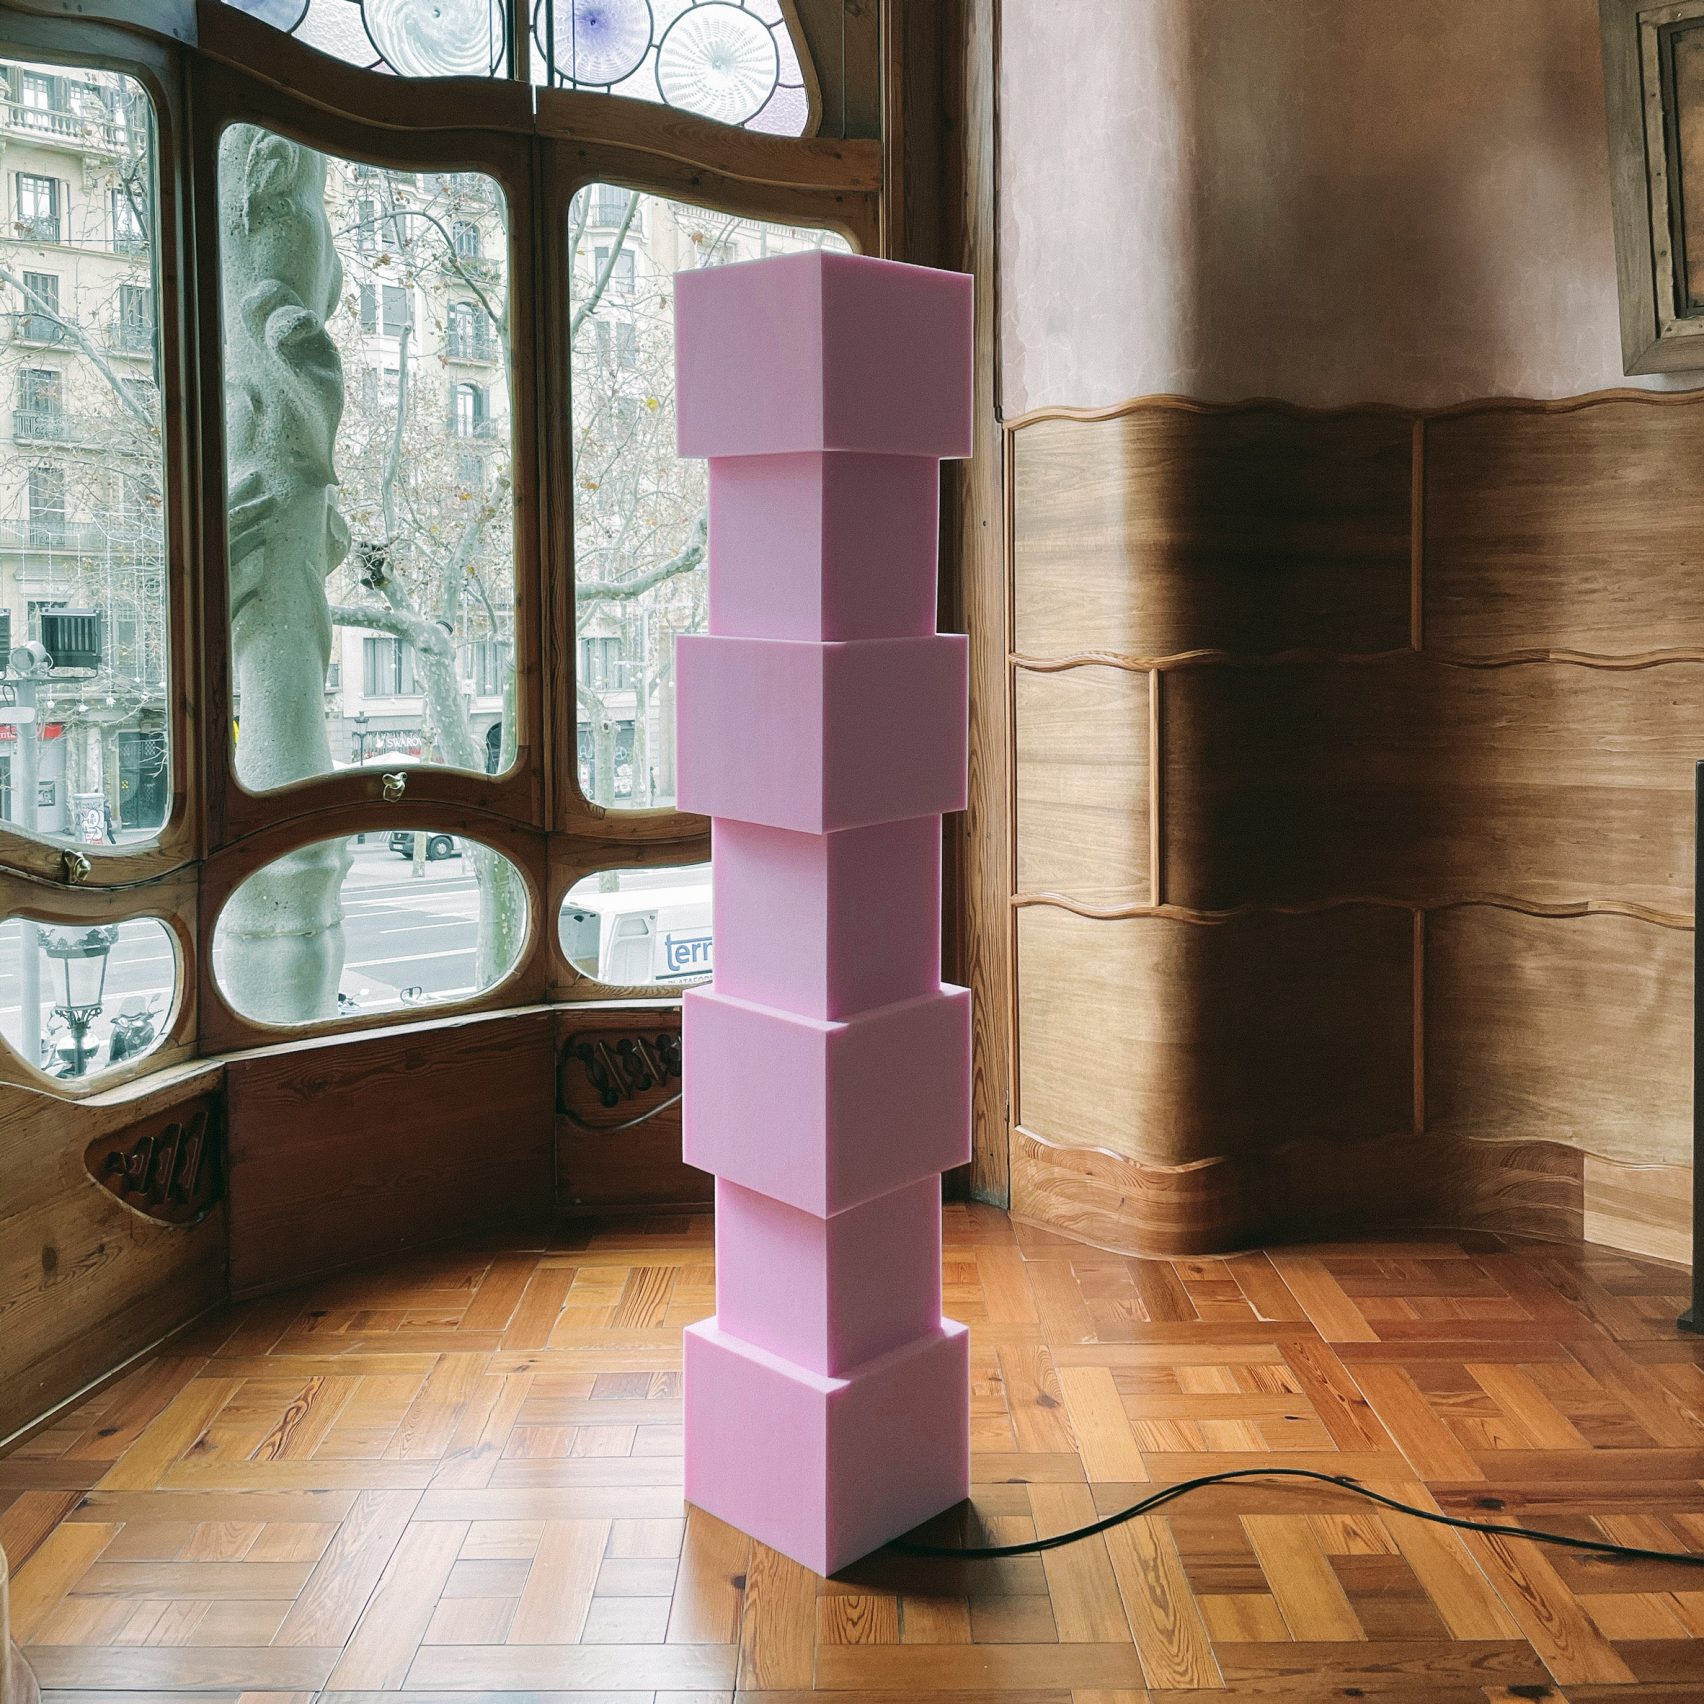 Max Enrich Sculpts Lamps From Upholstery Foam For Gaudís Casa Batlló 2855